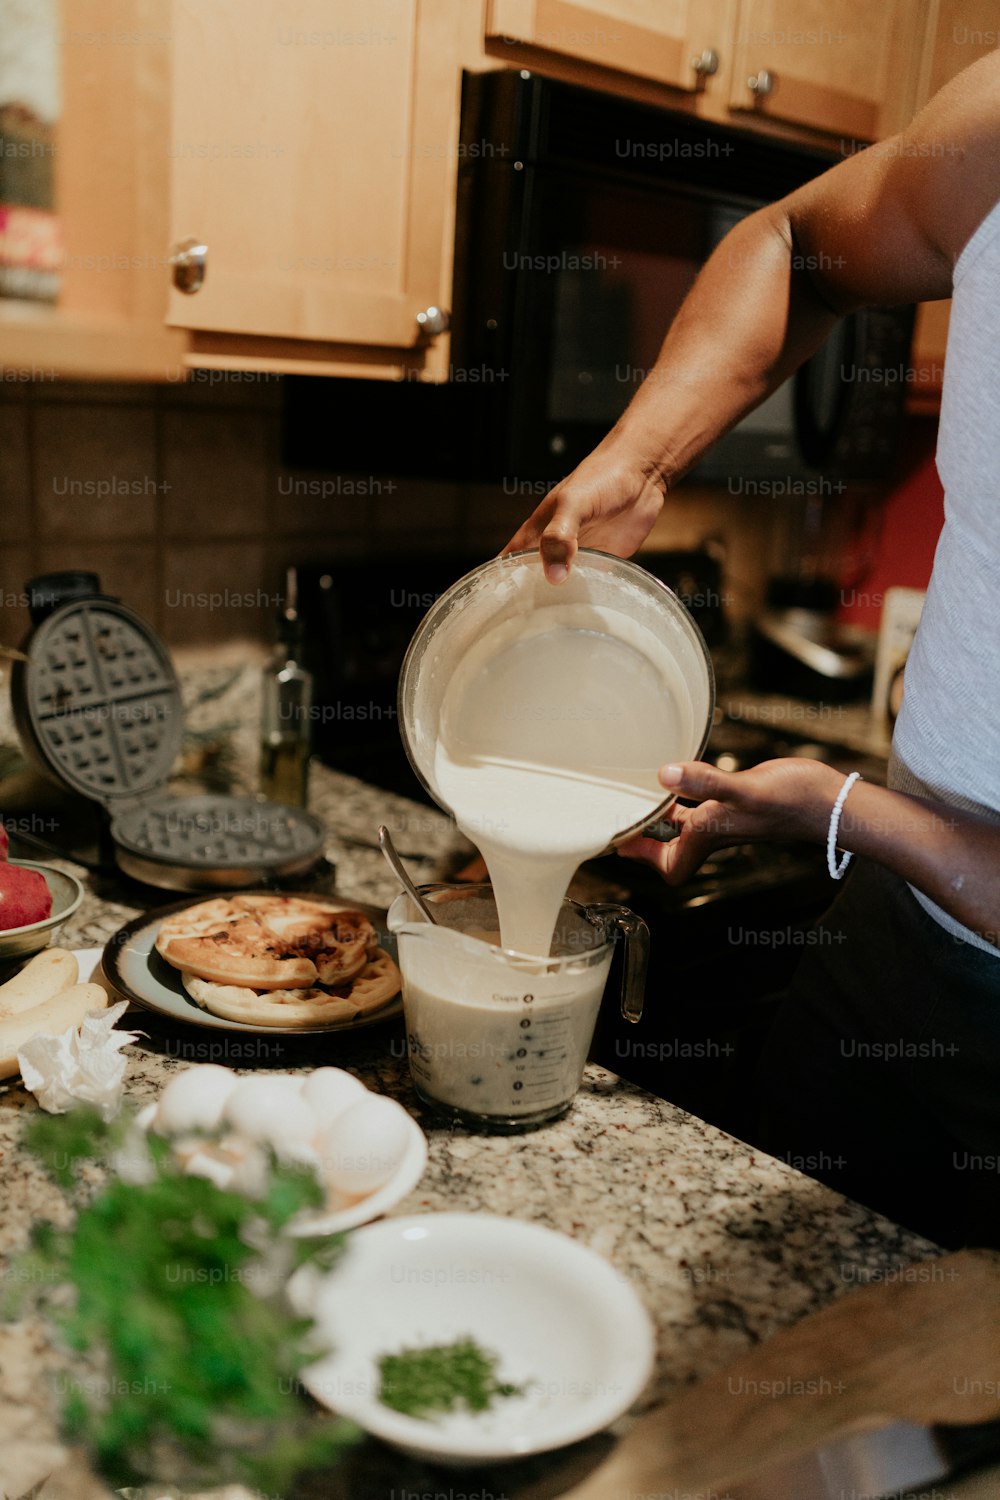 Una donna versa il latte in una ciotola su un bancone della cucina